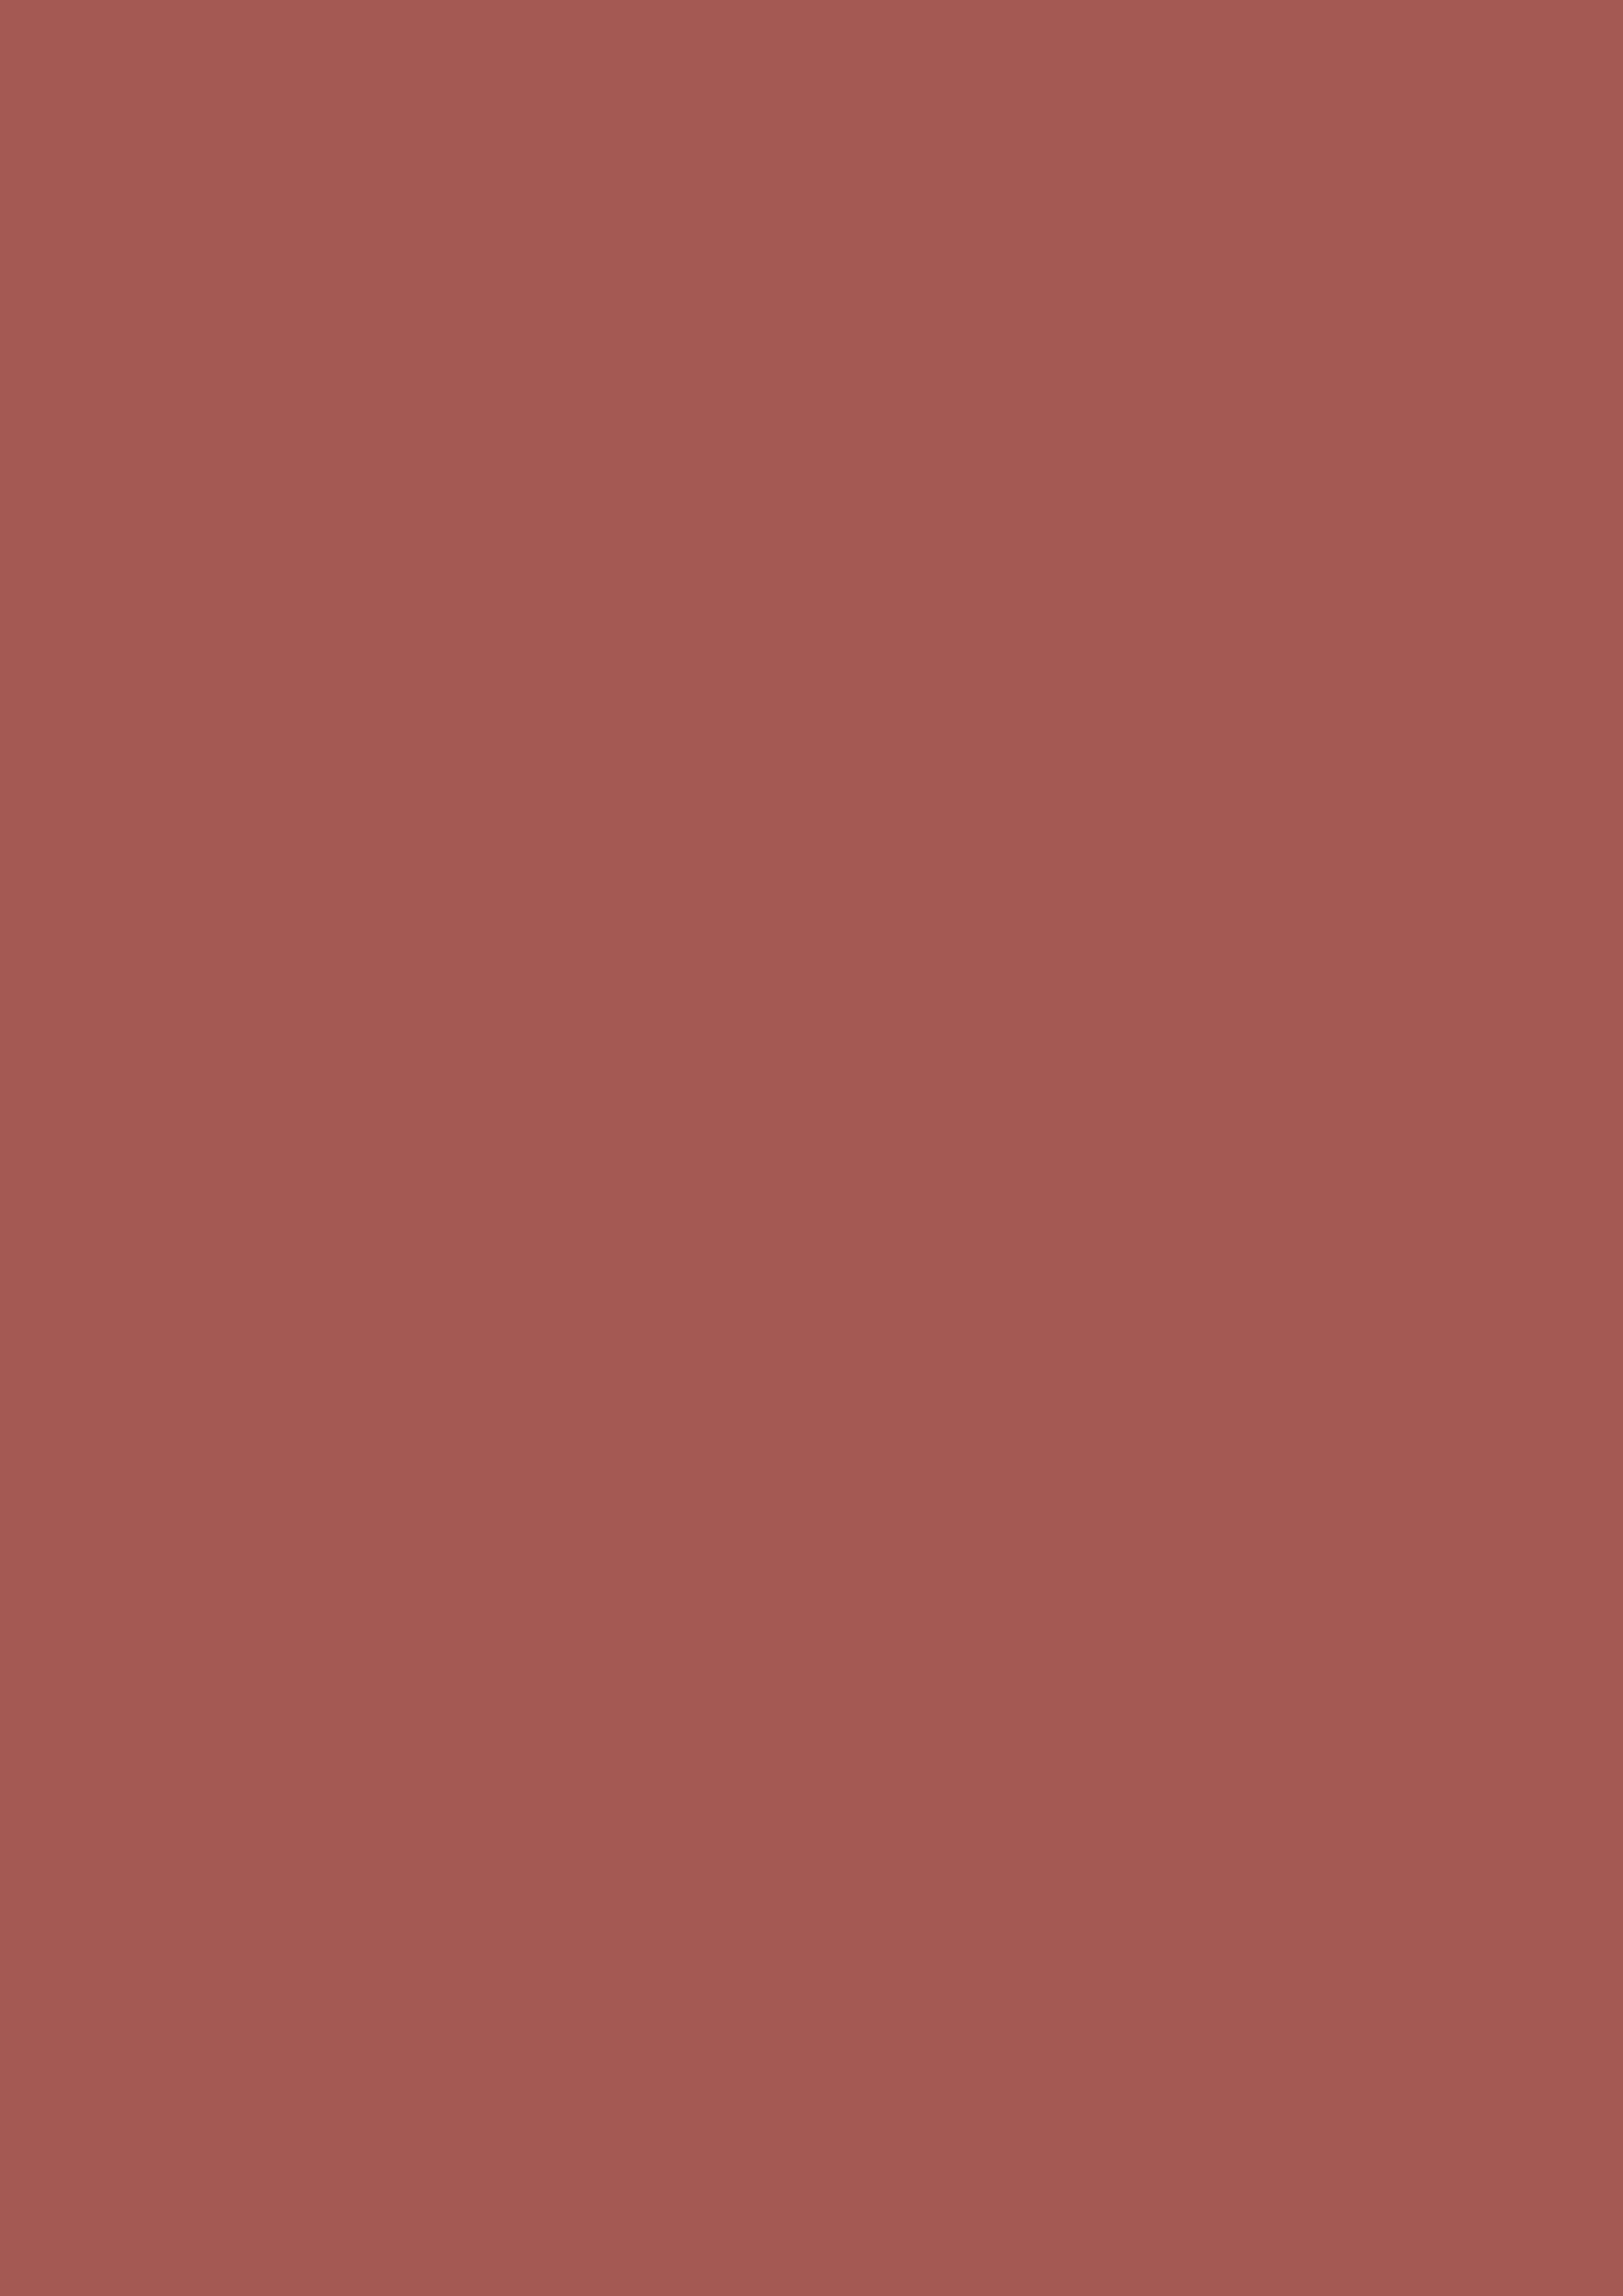 2480x3508 Redwood Solid Color Background